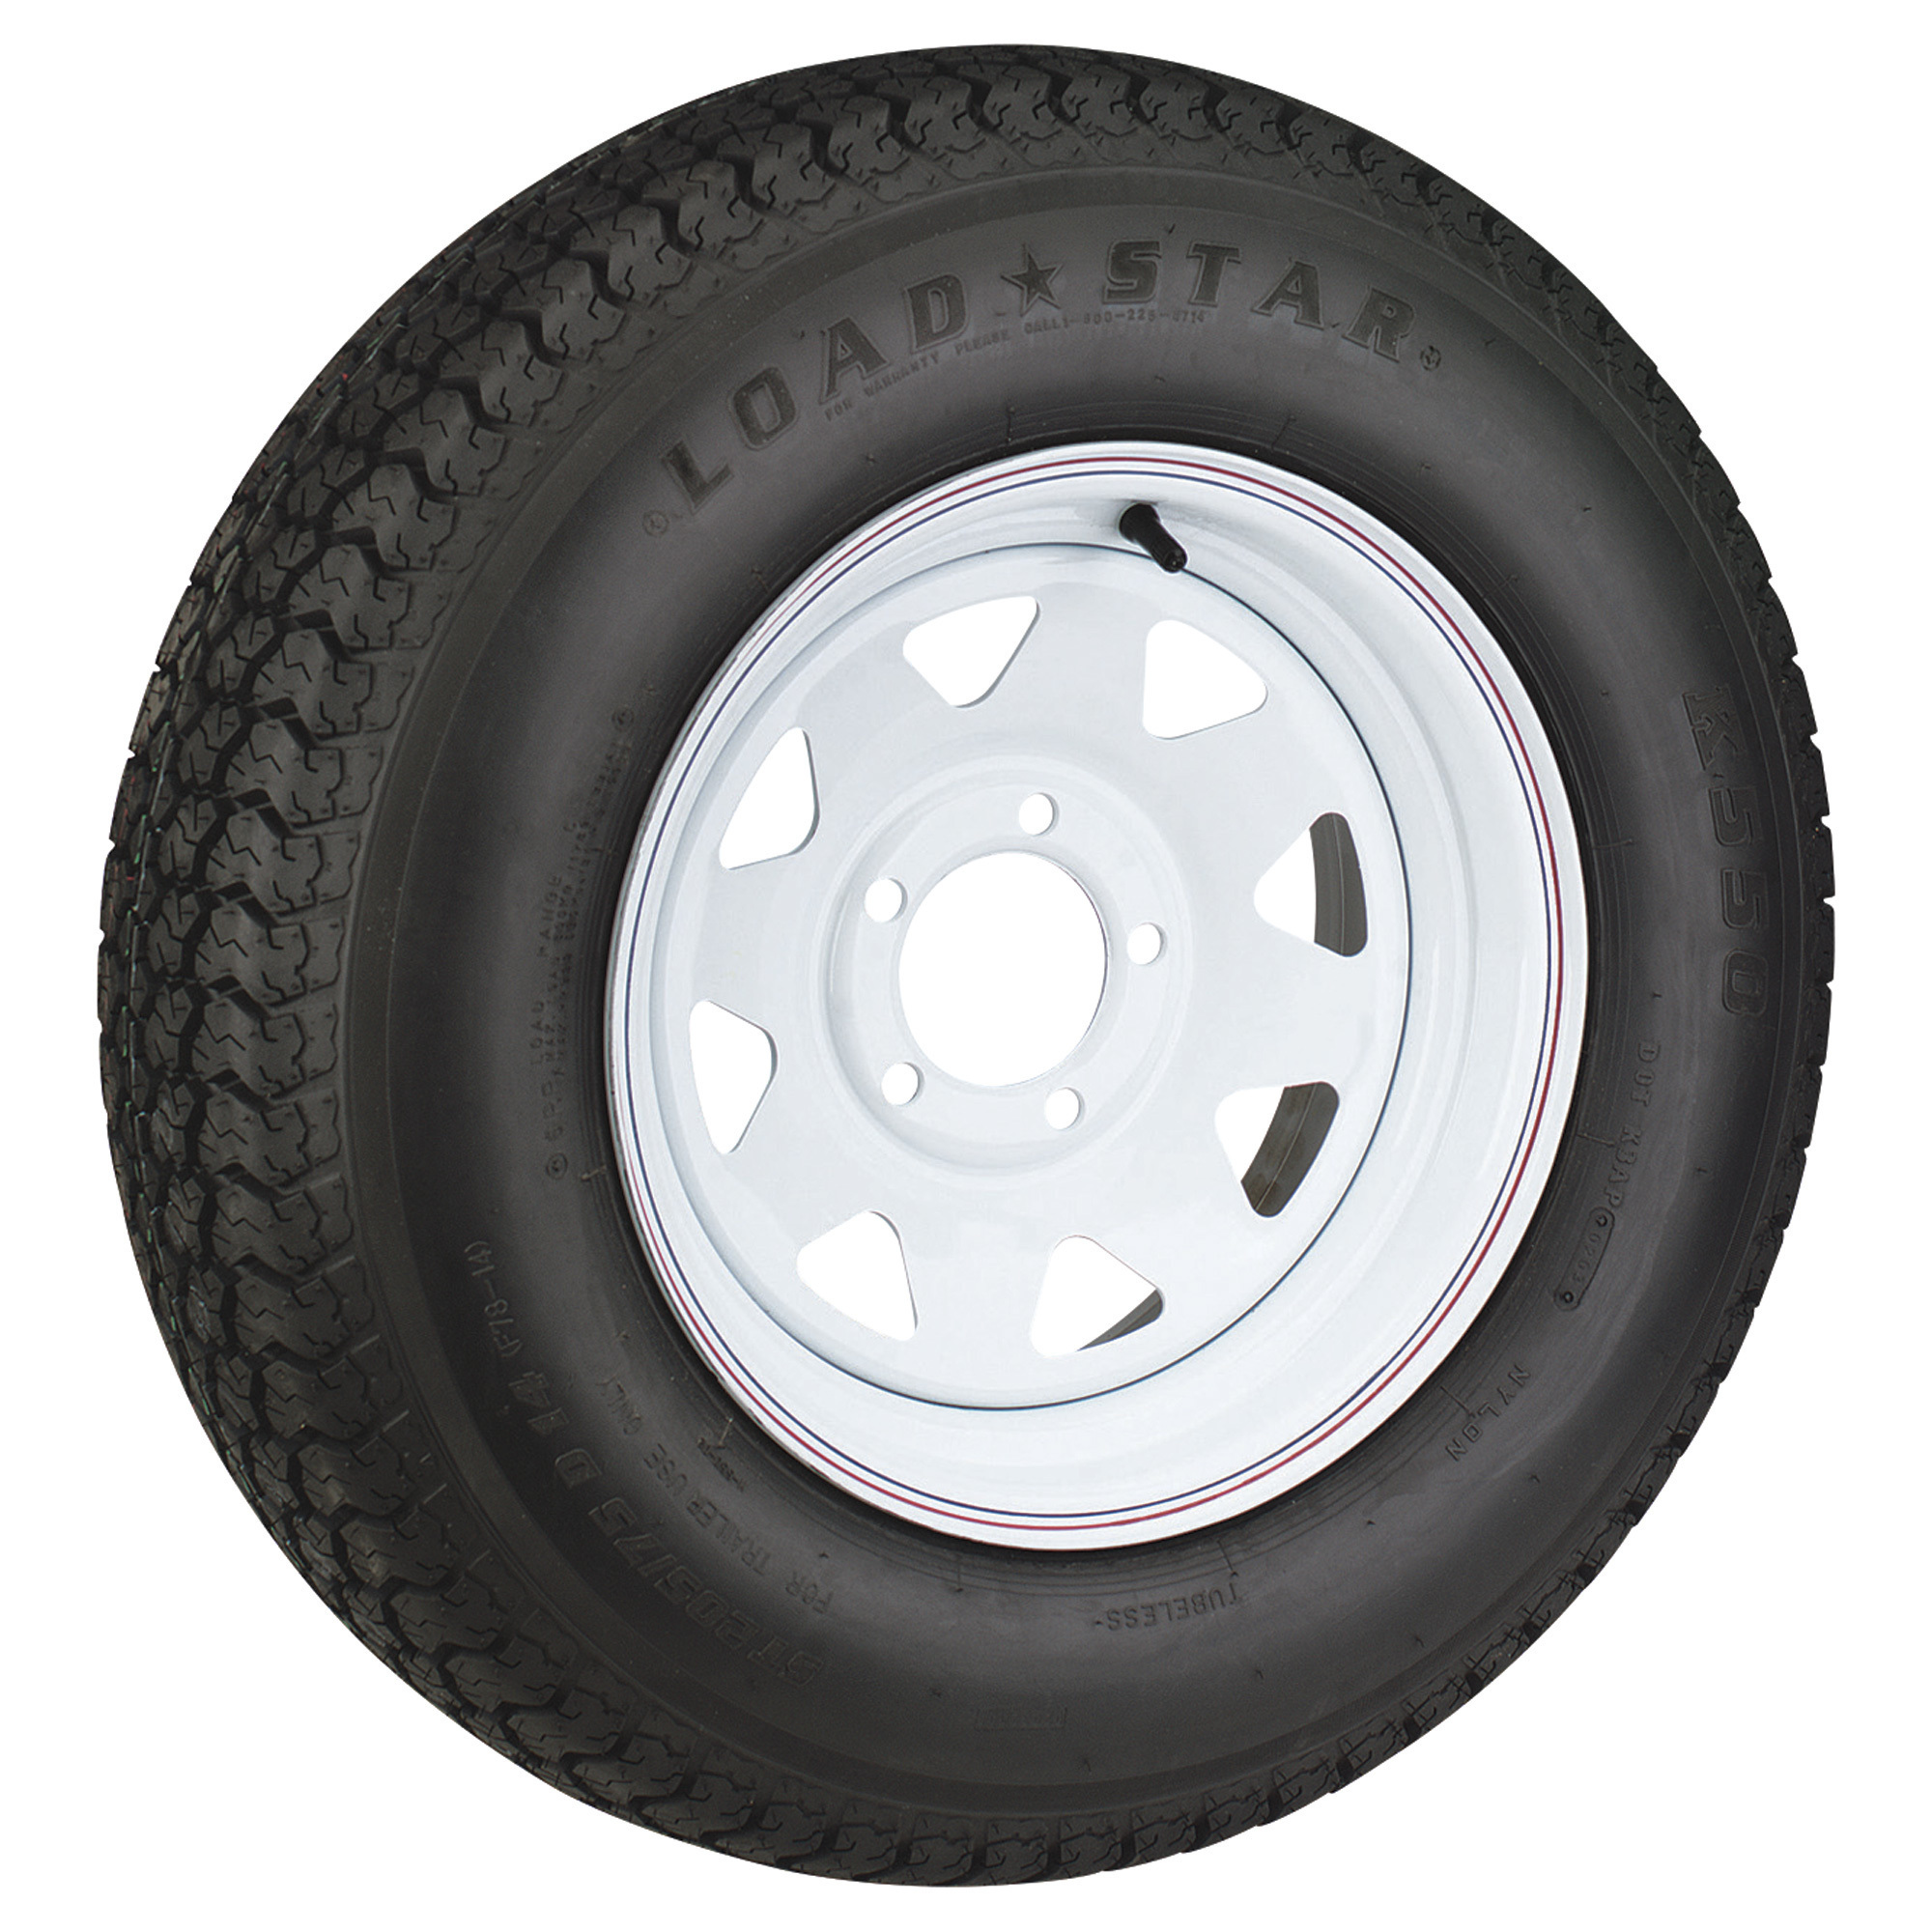 Kenda Loadstar 15Inch Radial Trailer Tire and Wheel Assembly â ST225/75R-15, 5-Hole, Load Range C, Model DM225R5C-5CIN